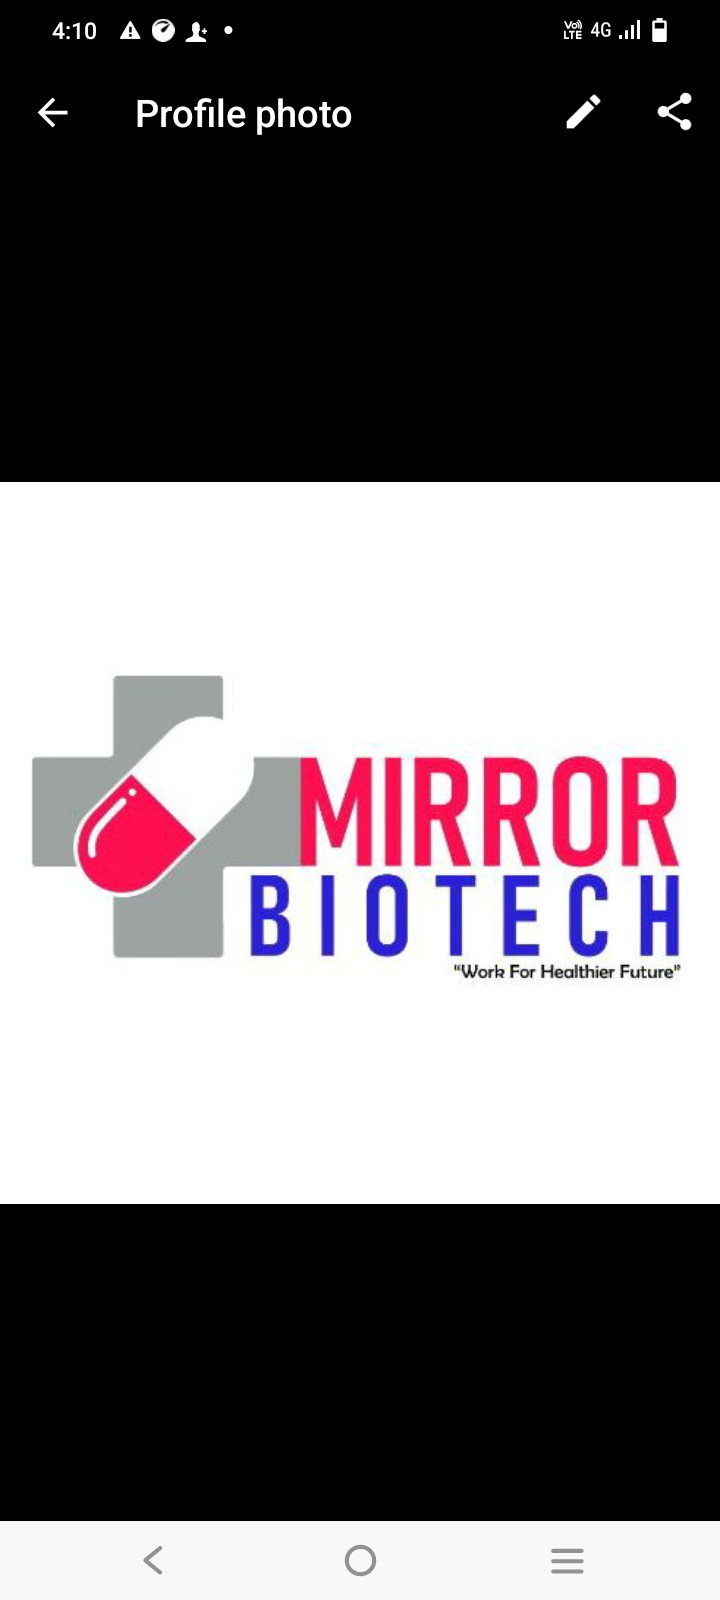 Mirror Biotech